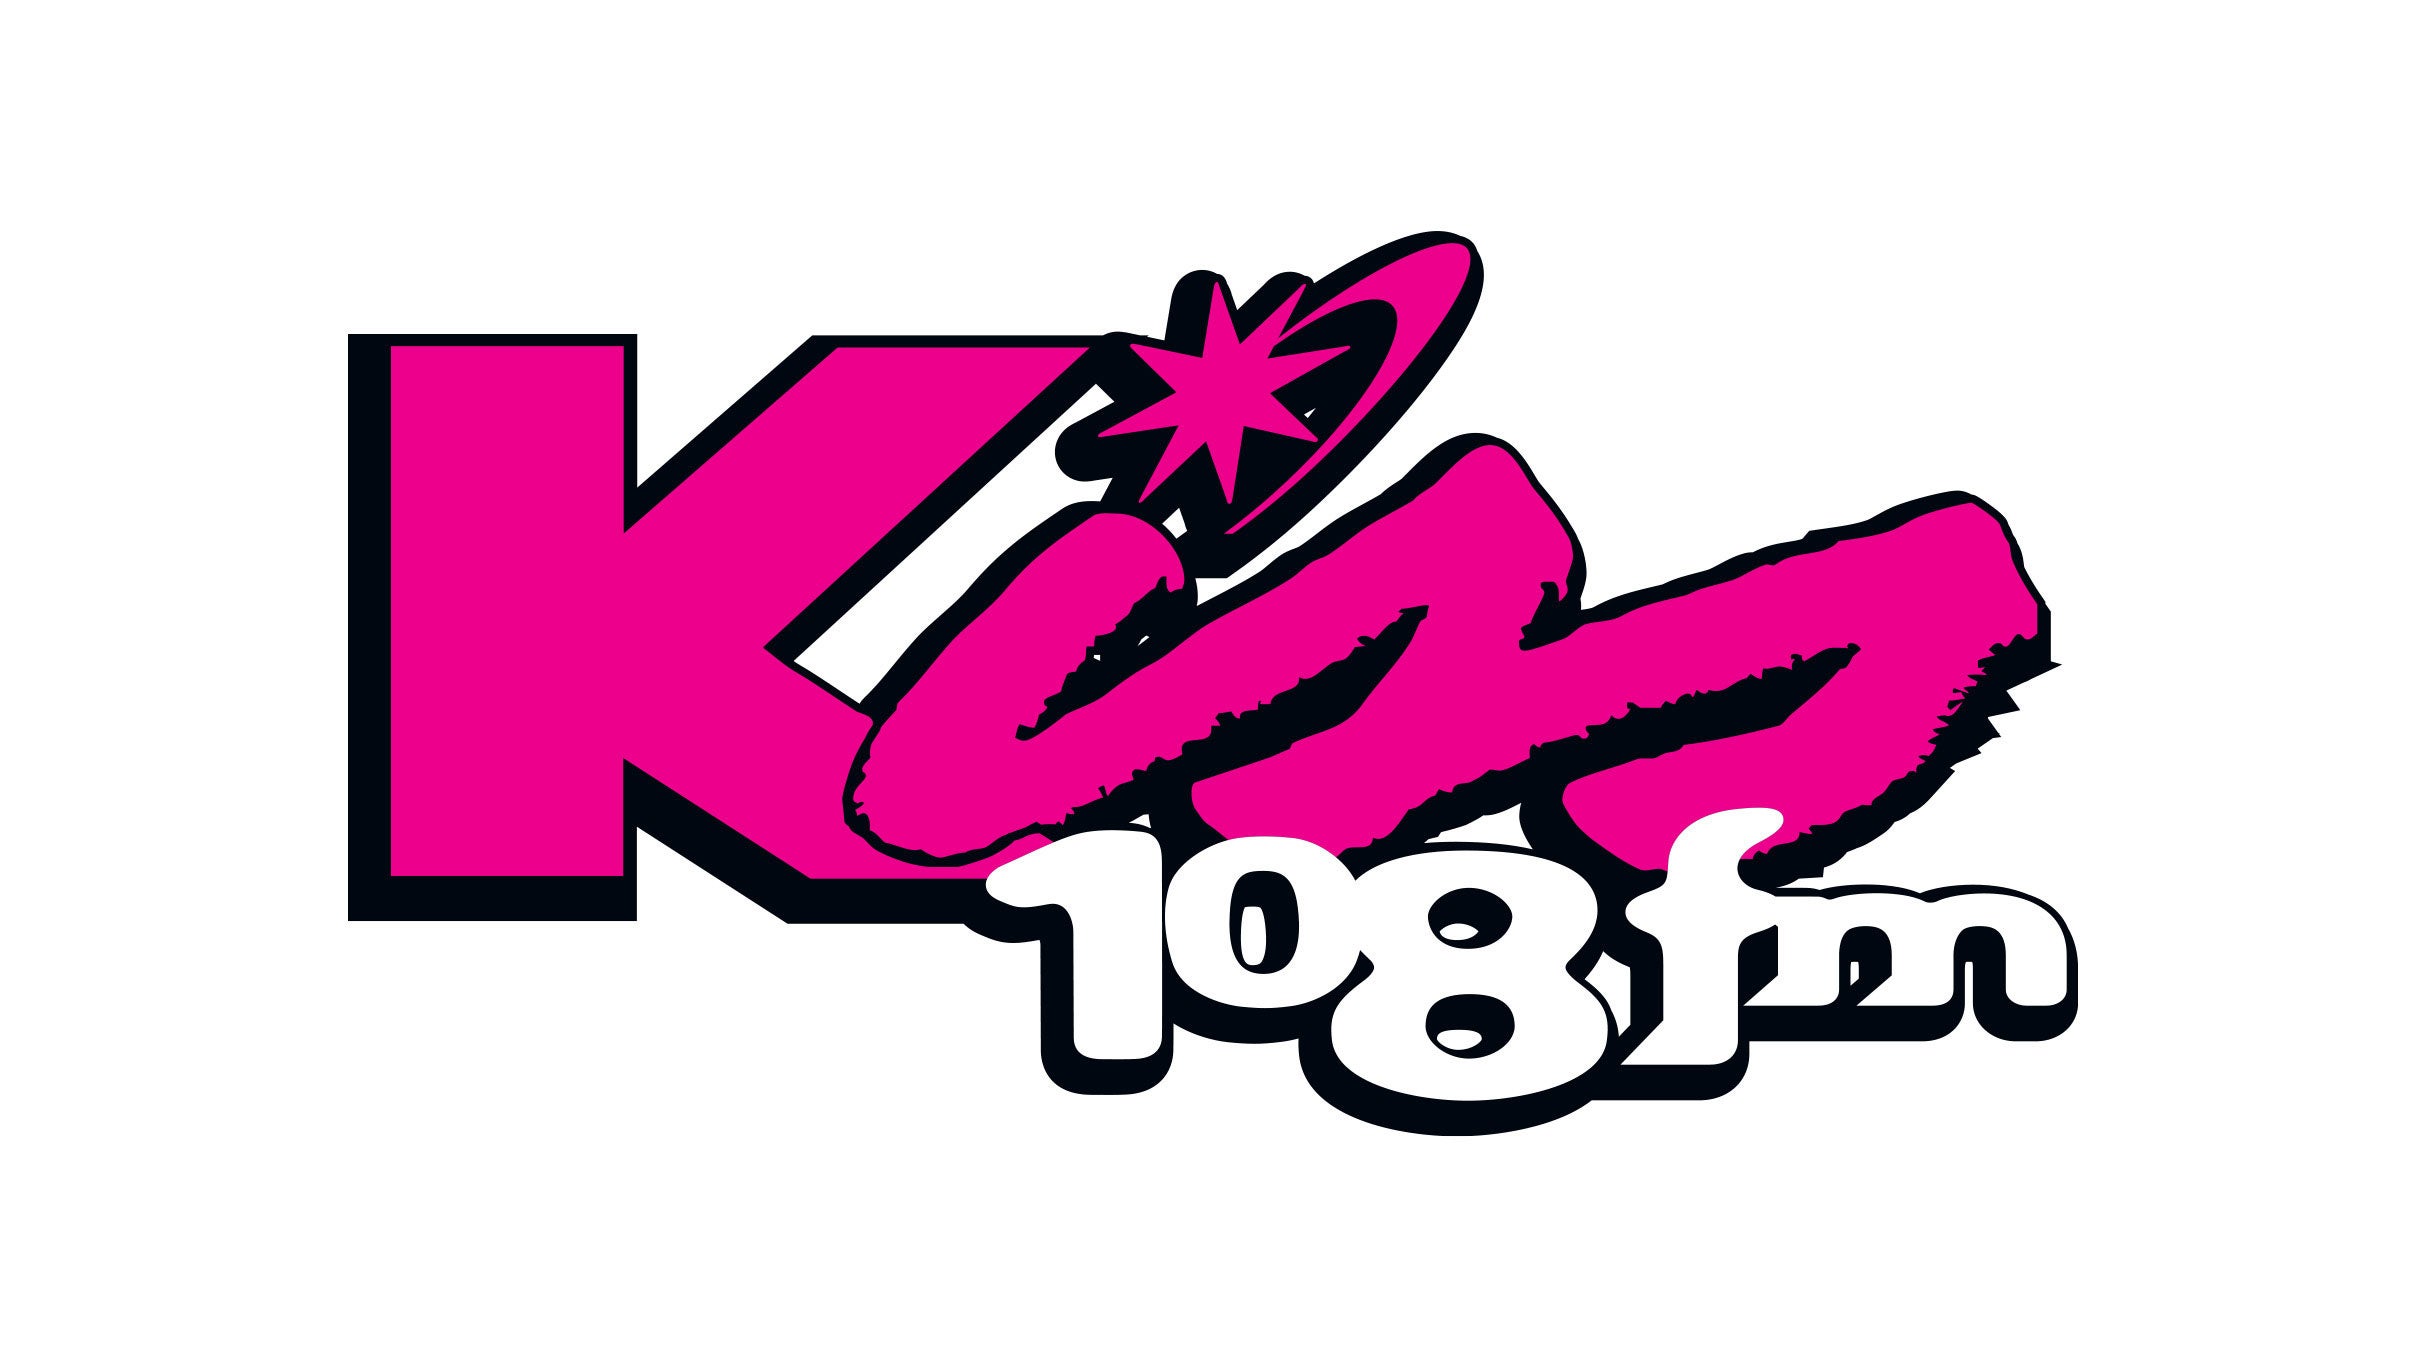 KISS 108 PRESENTS KISS CONCERT 2022 in Mansfield promo photo for Venue Sponsor presale offer code